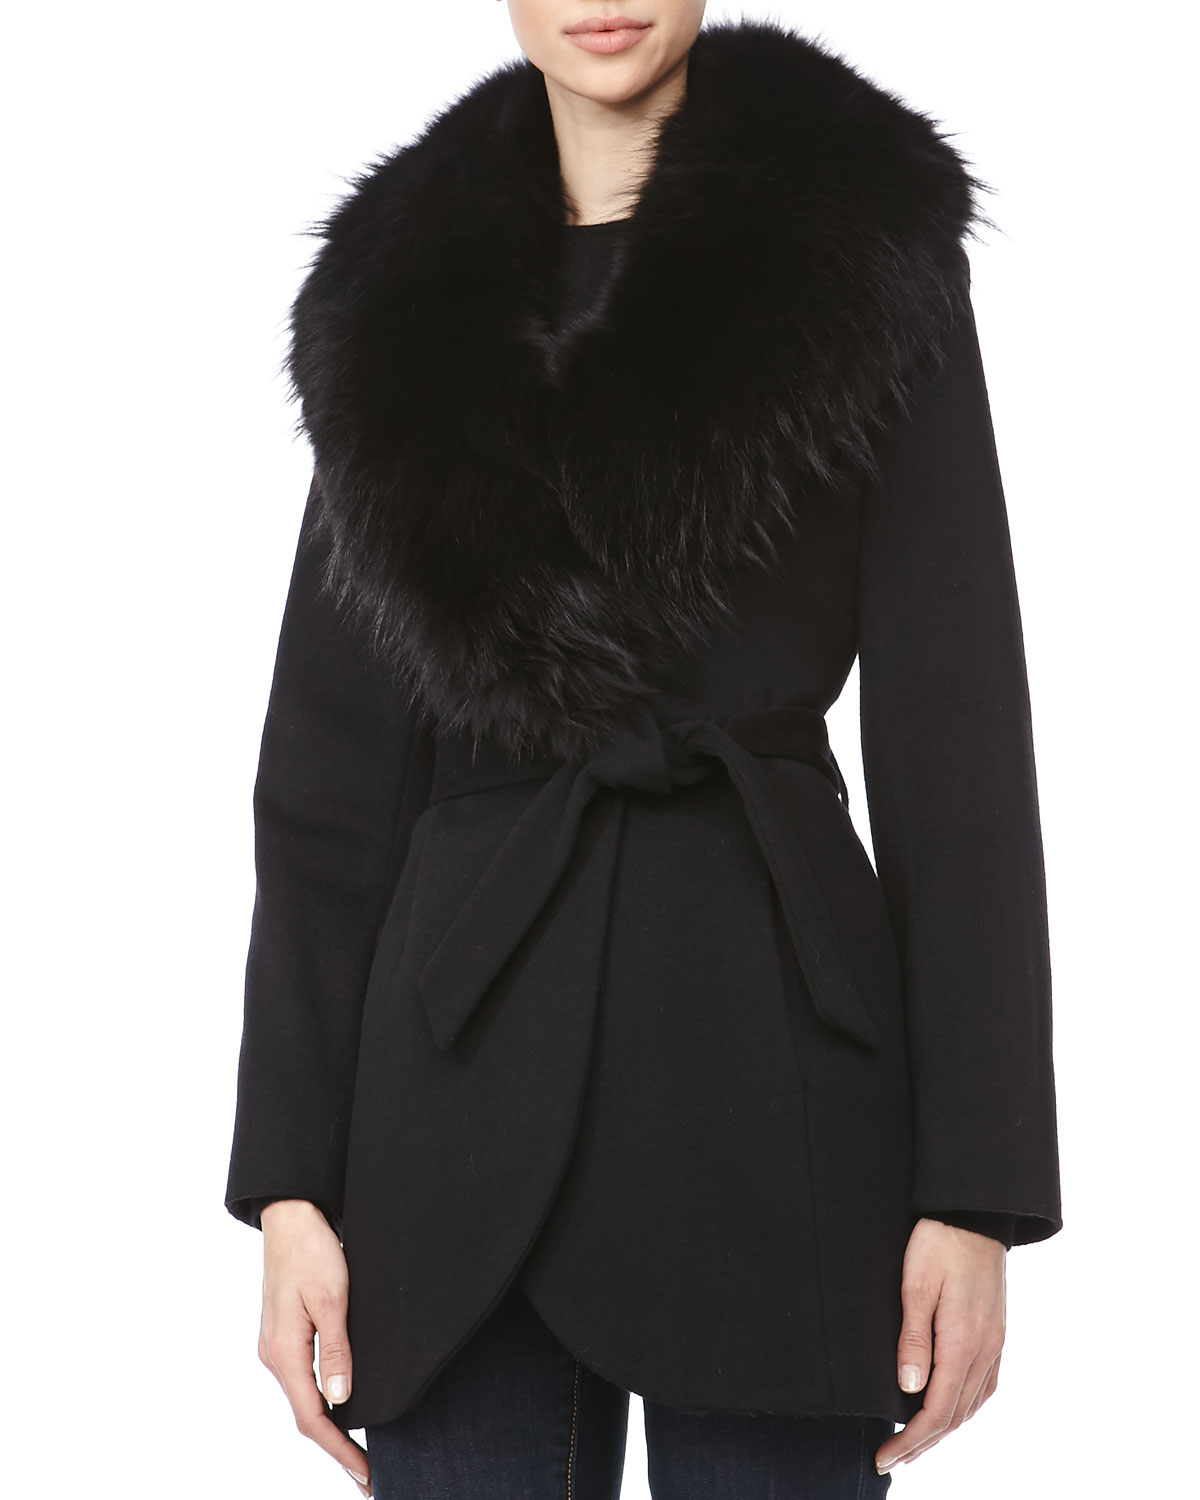 Sofia Cashmere Wrap Jacket with Fur Shawl Collar in Black | Lyst